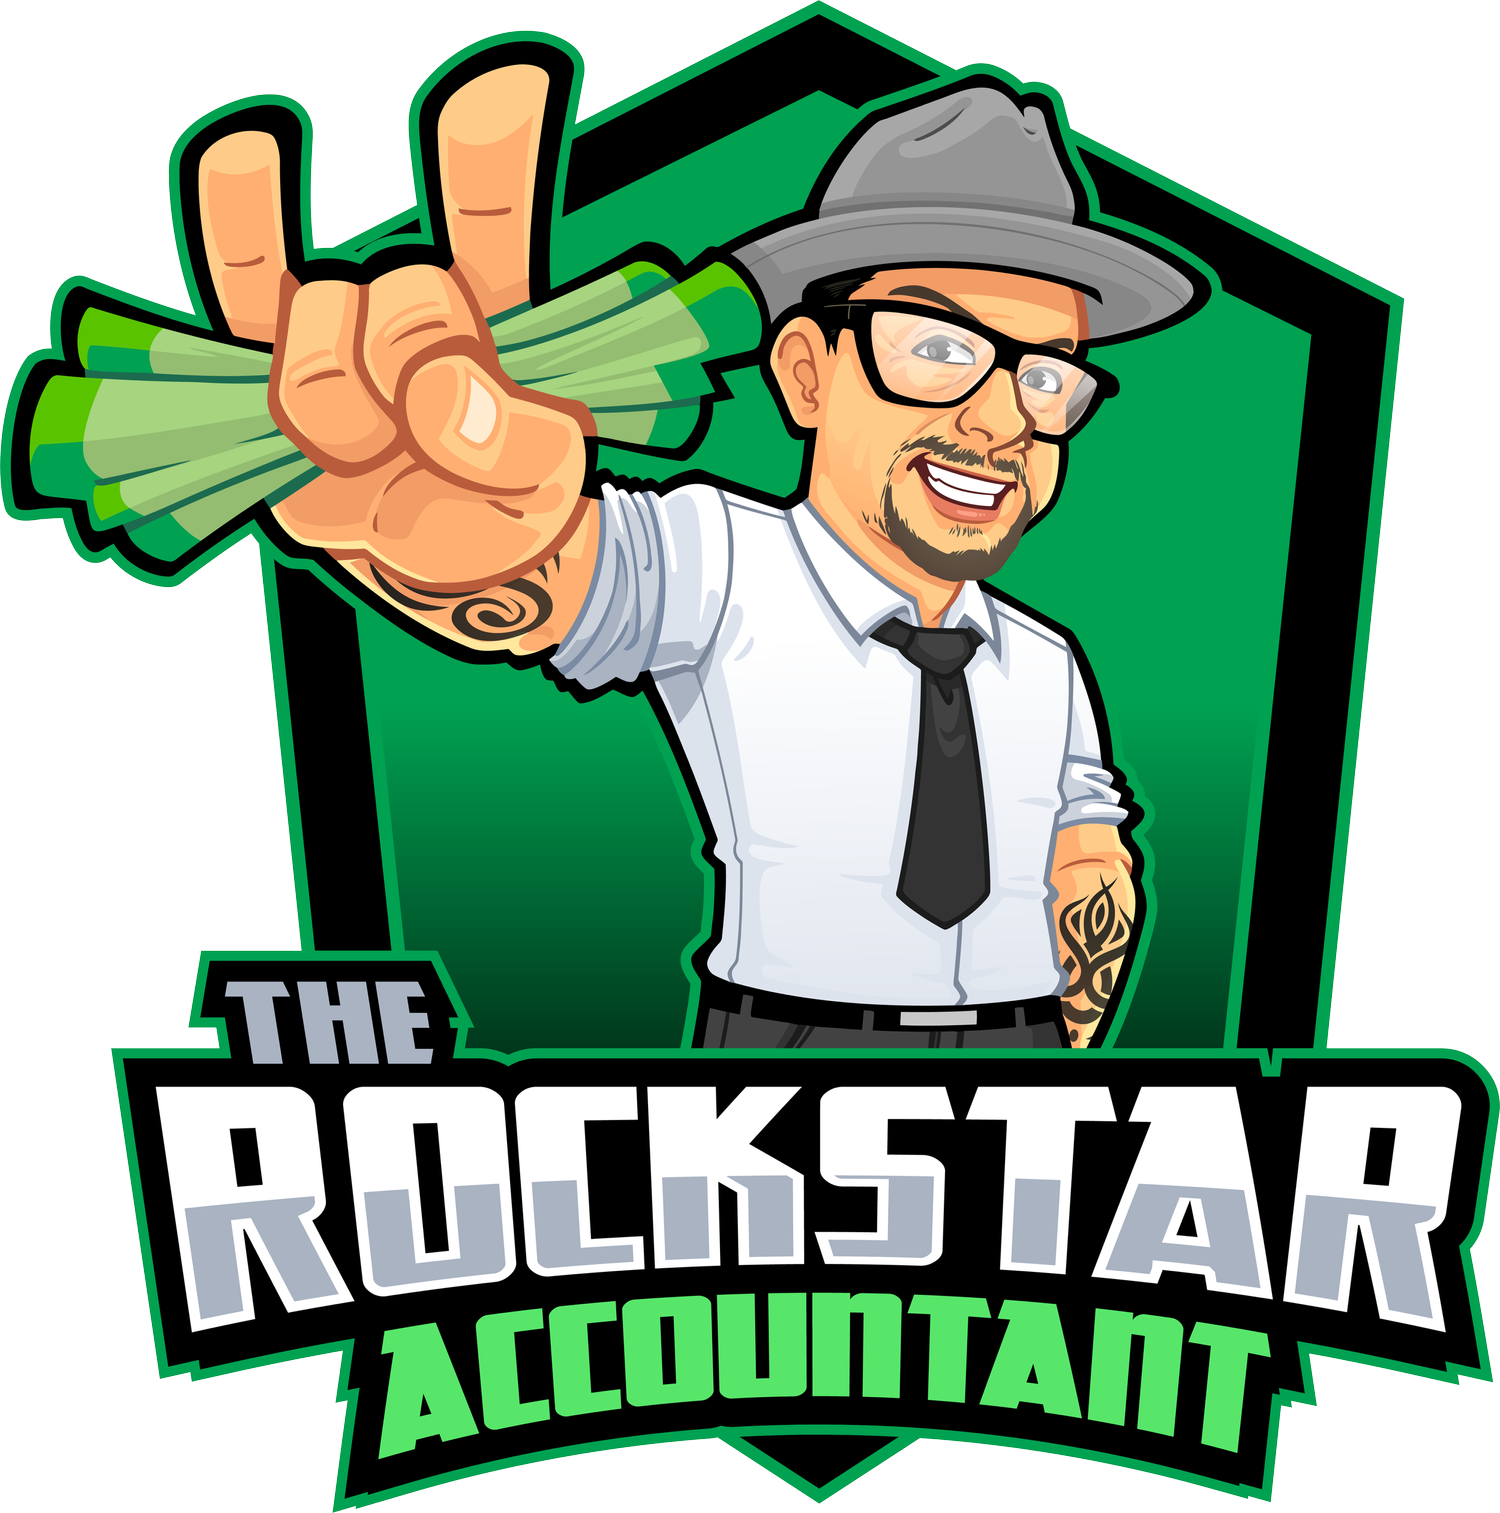 The Rockstar Accountant